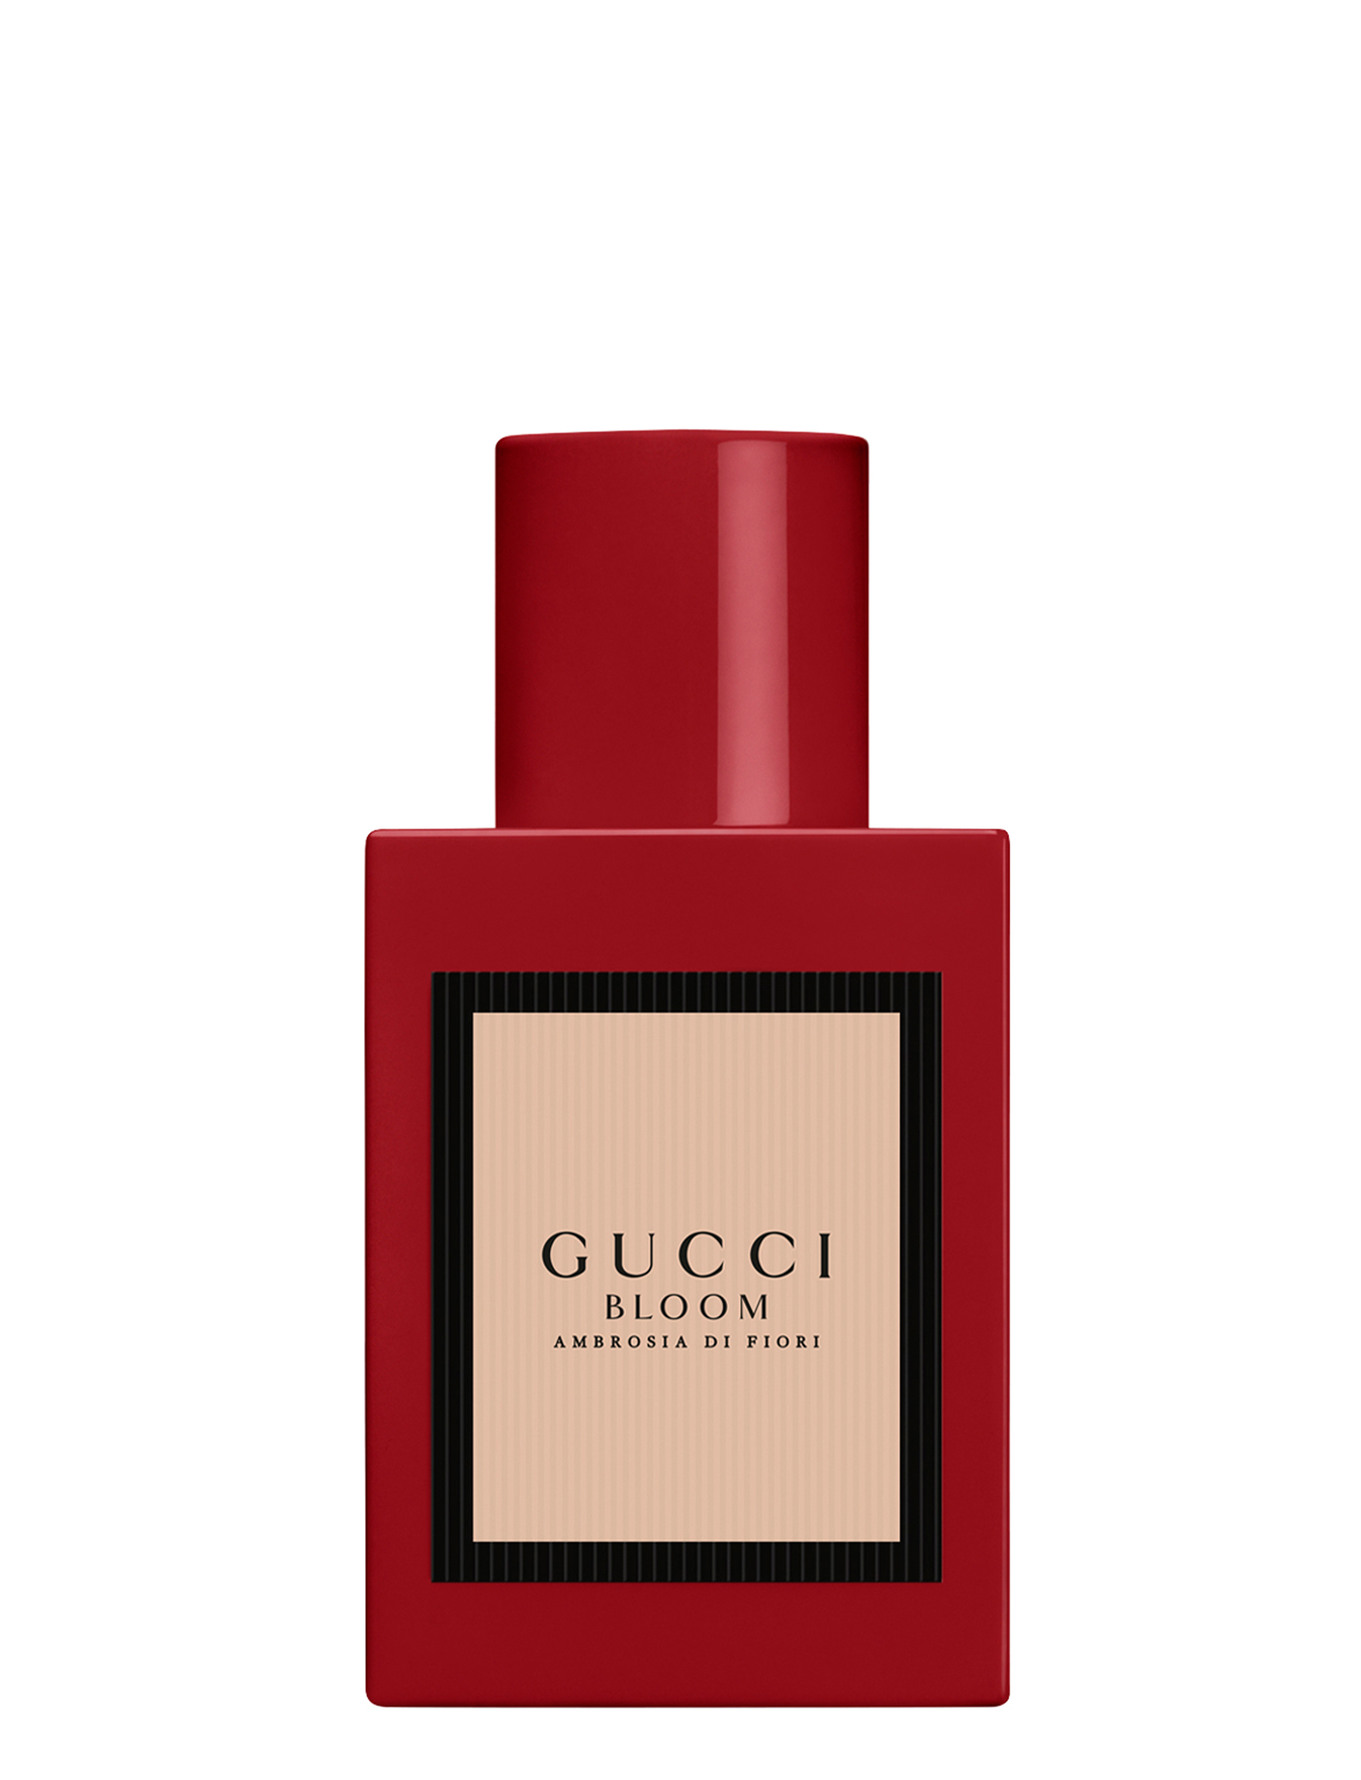 svær at tilfredsstille Rise Kabelbane Køb Gucci Bloom Ambrosia di Fiori Eau de parfum 30 ml - Matas